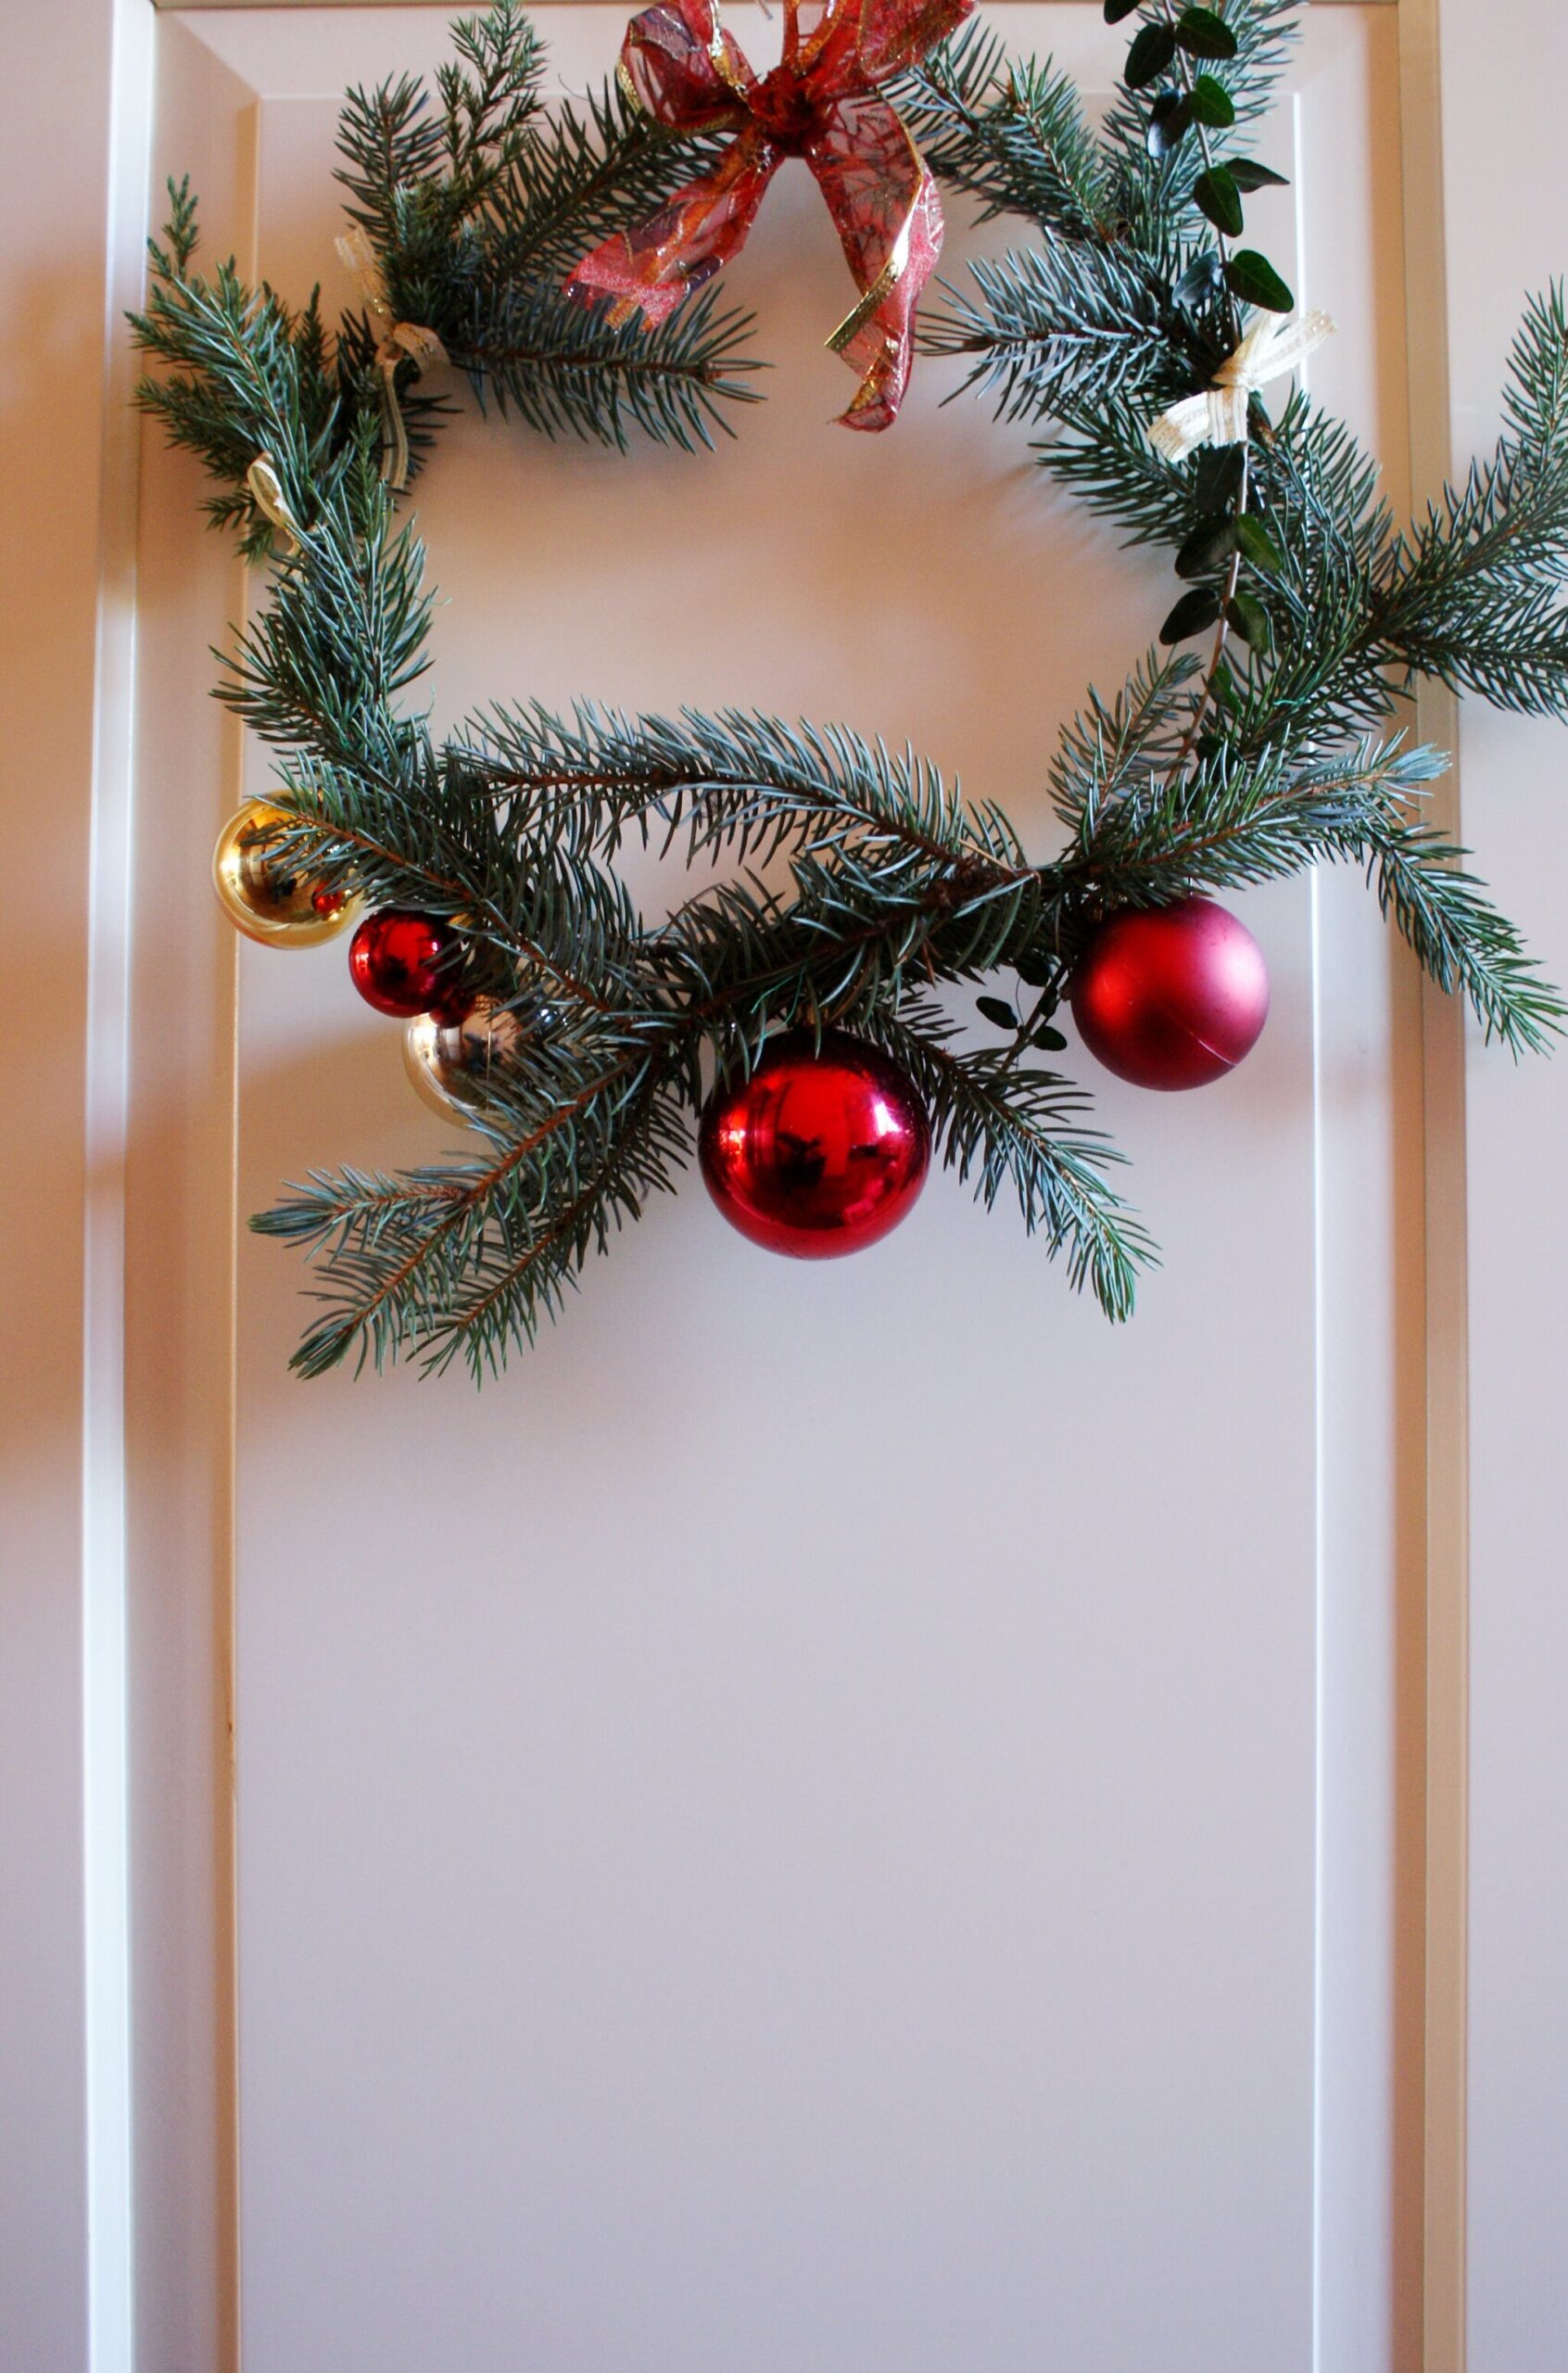 diy-christmas-wreath-idea-decor-garland-pine-easy-corona-ghirlanda-natale-faidate-pino-balls-palline-francinesplaceblog-11-scaled.jpg8